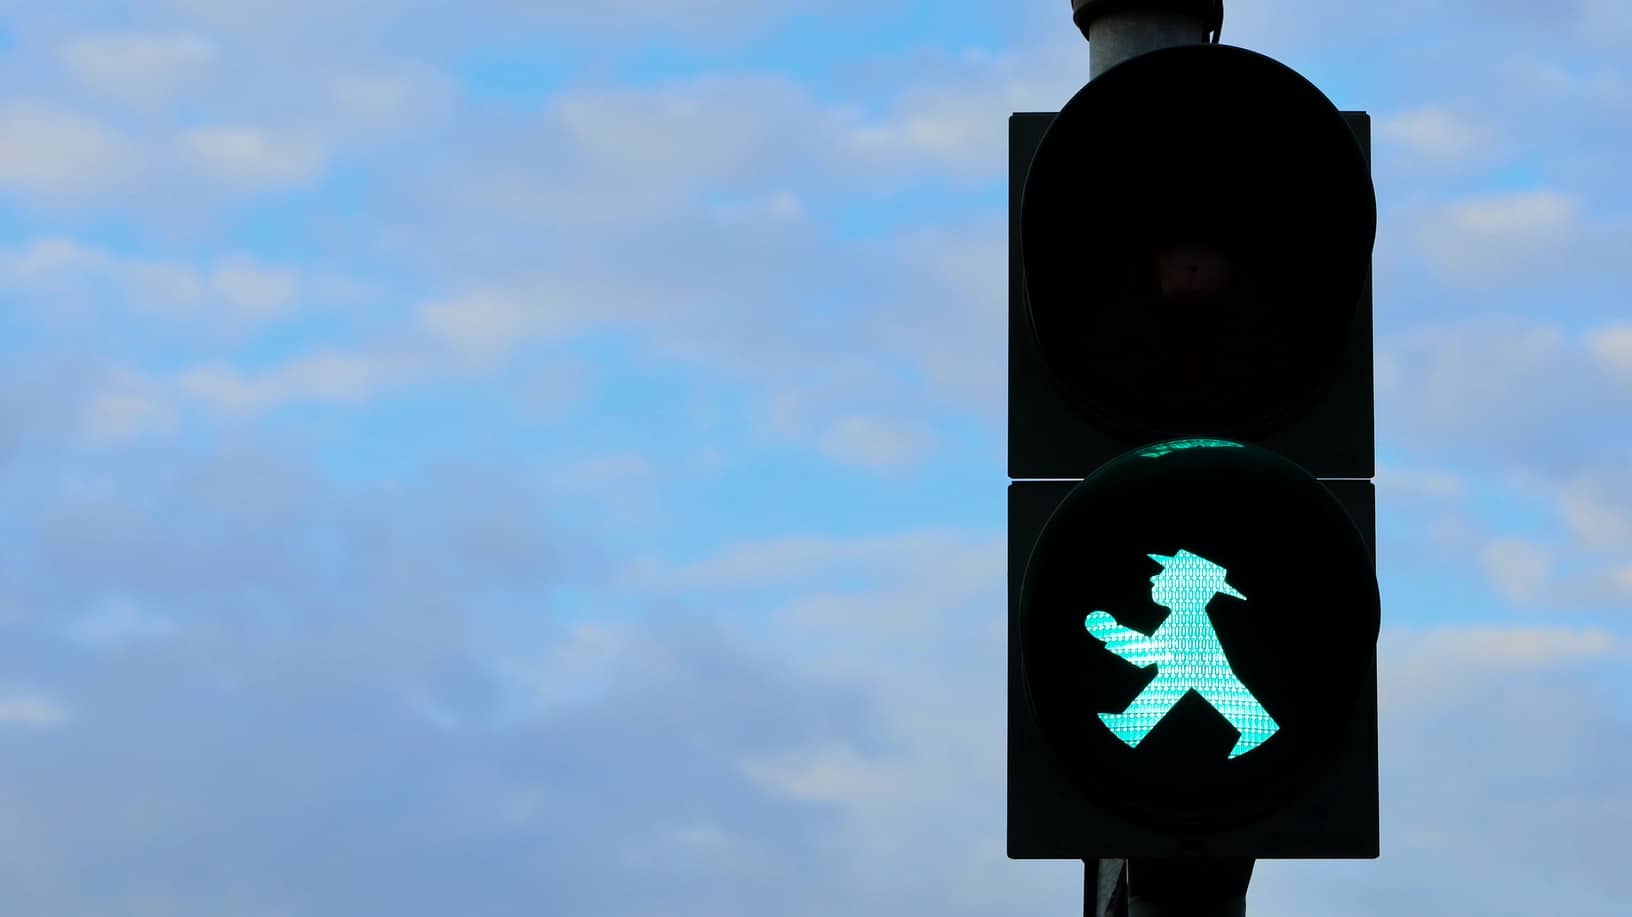 traffic light showing green walking person